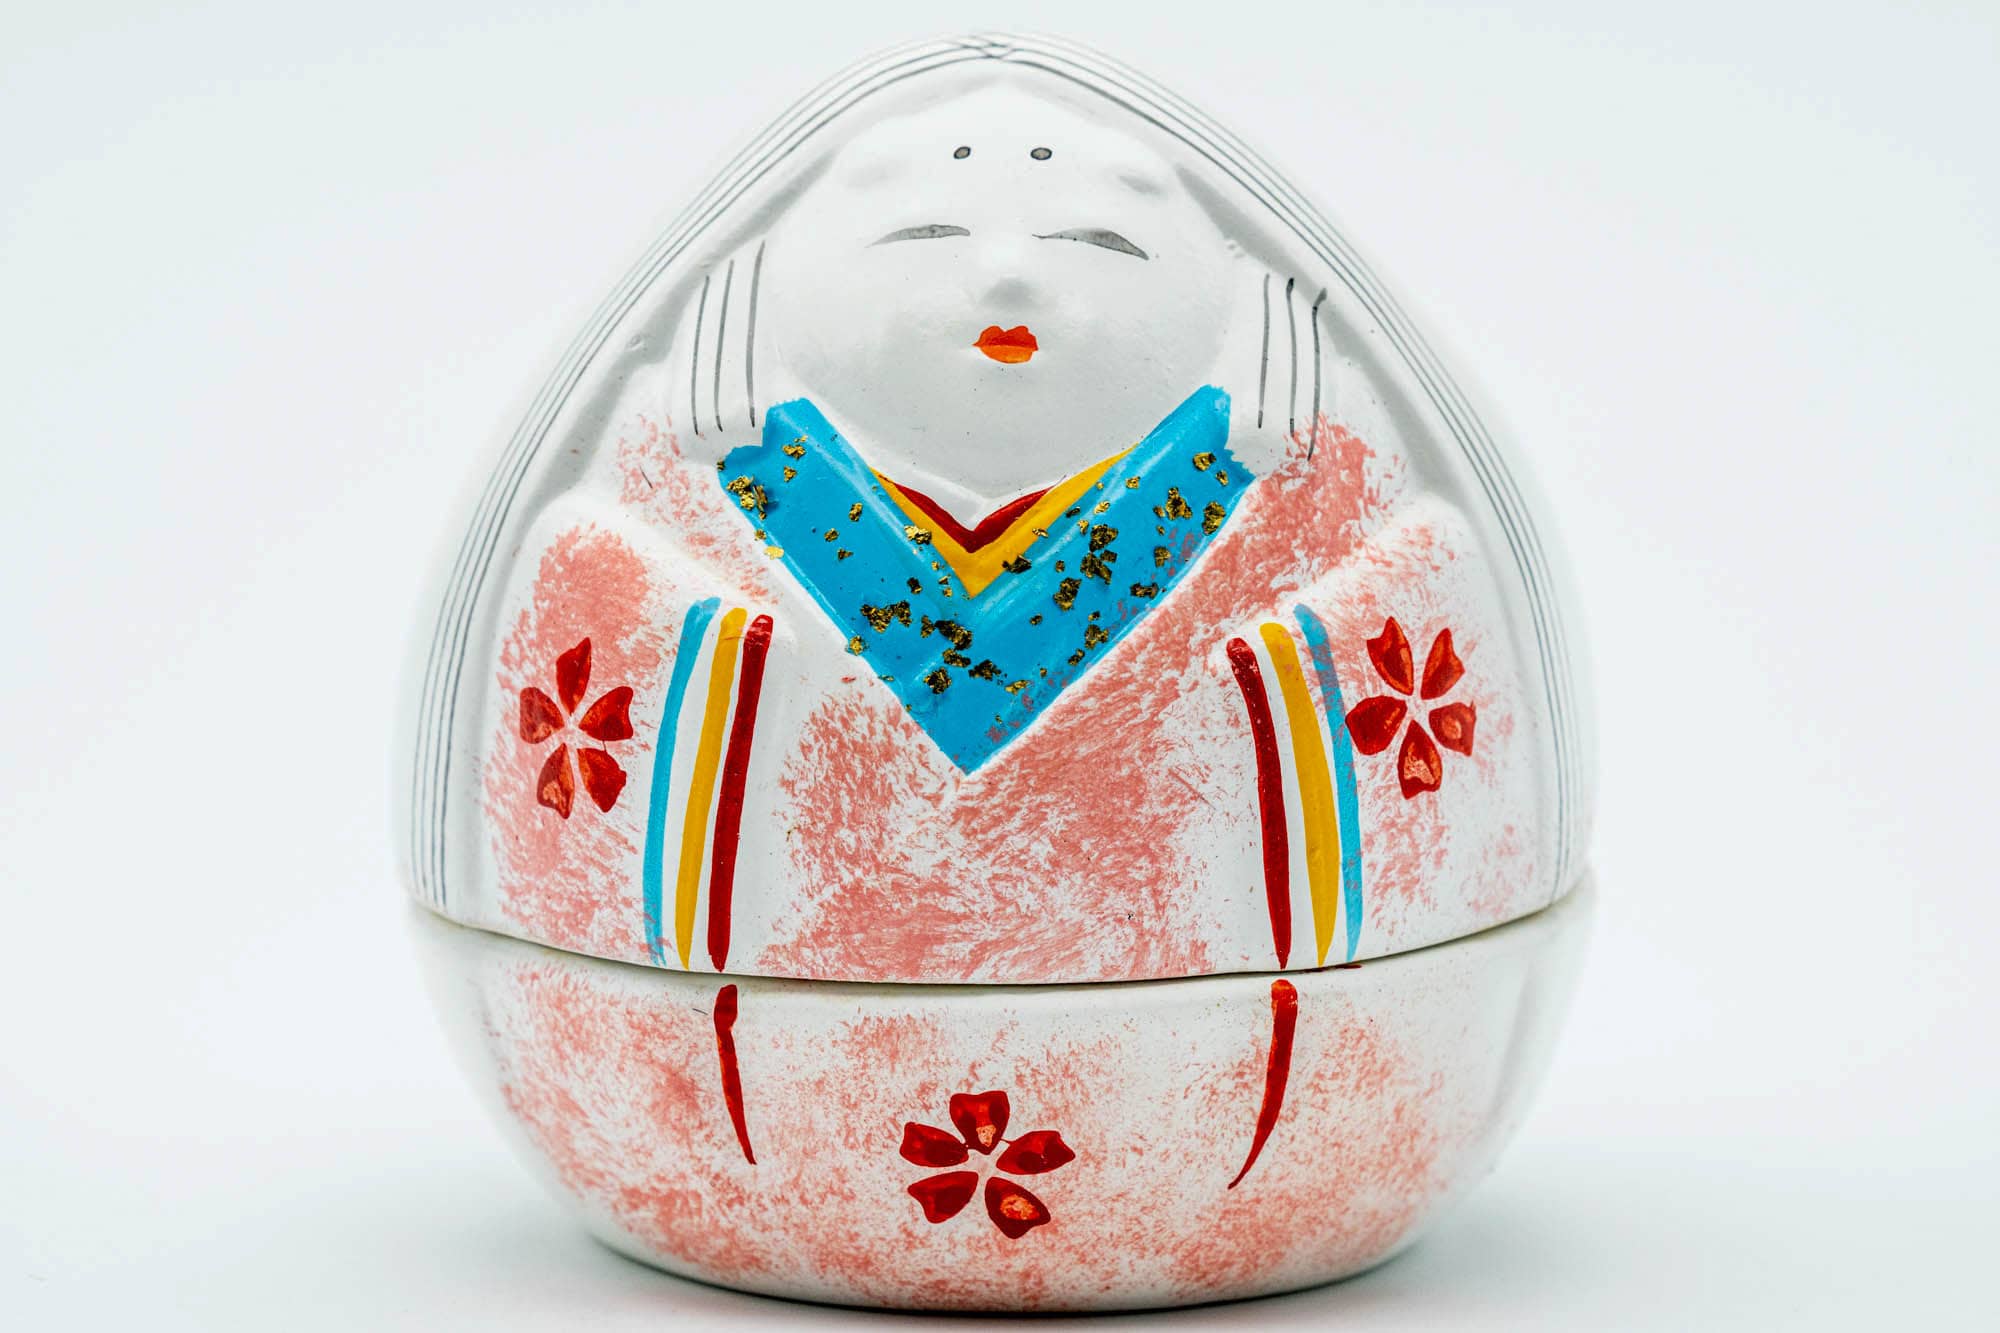 Japanese Kogo - Sakura Woman Decorated Ceramic Incense Container